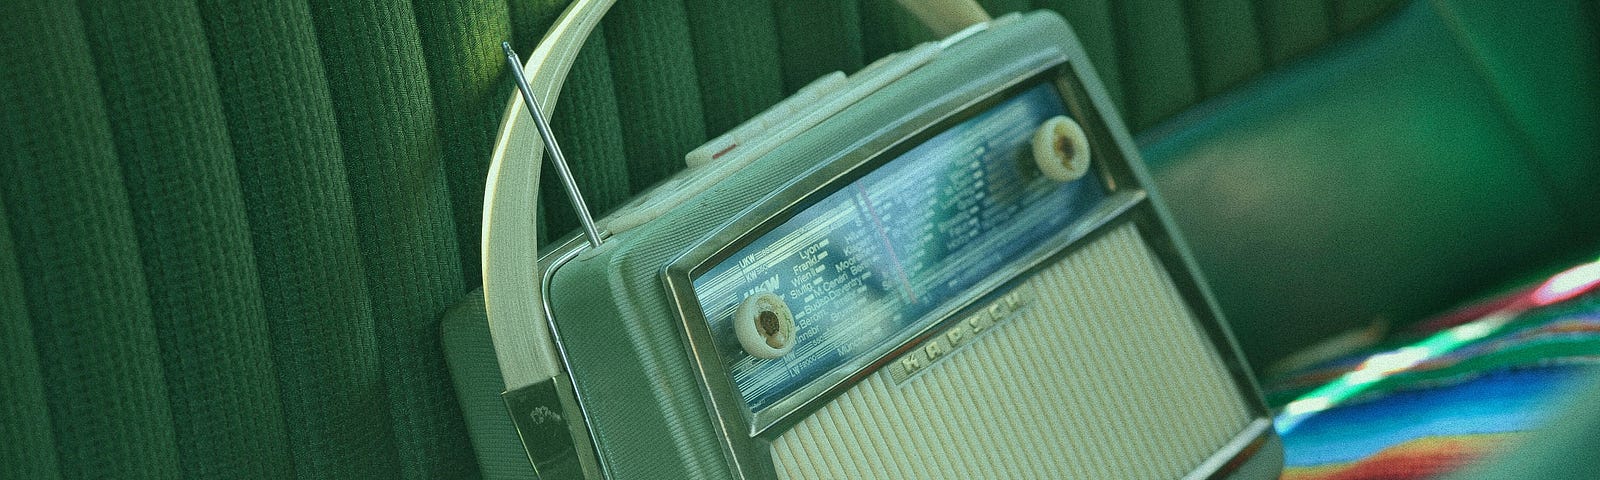 Vintage radio on the back of a vintage car.